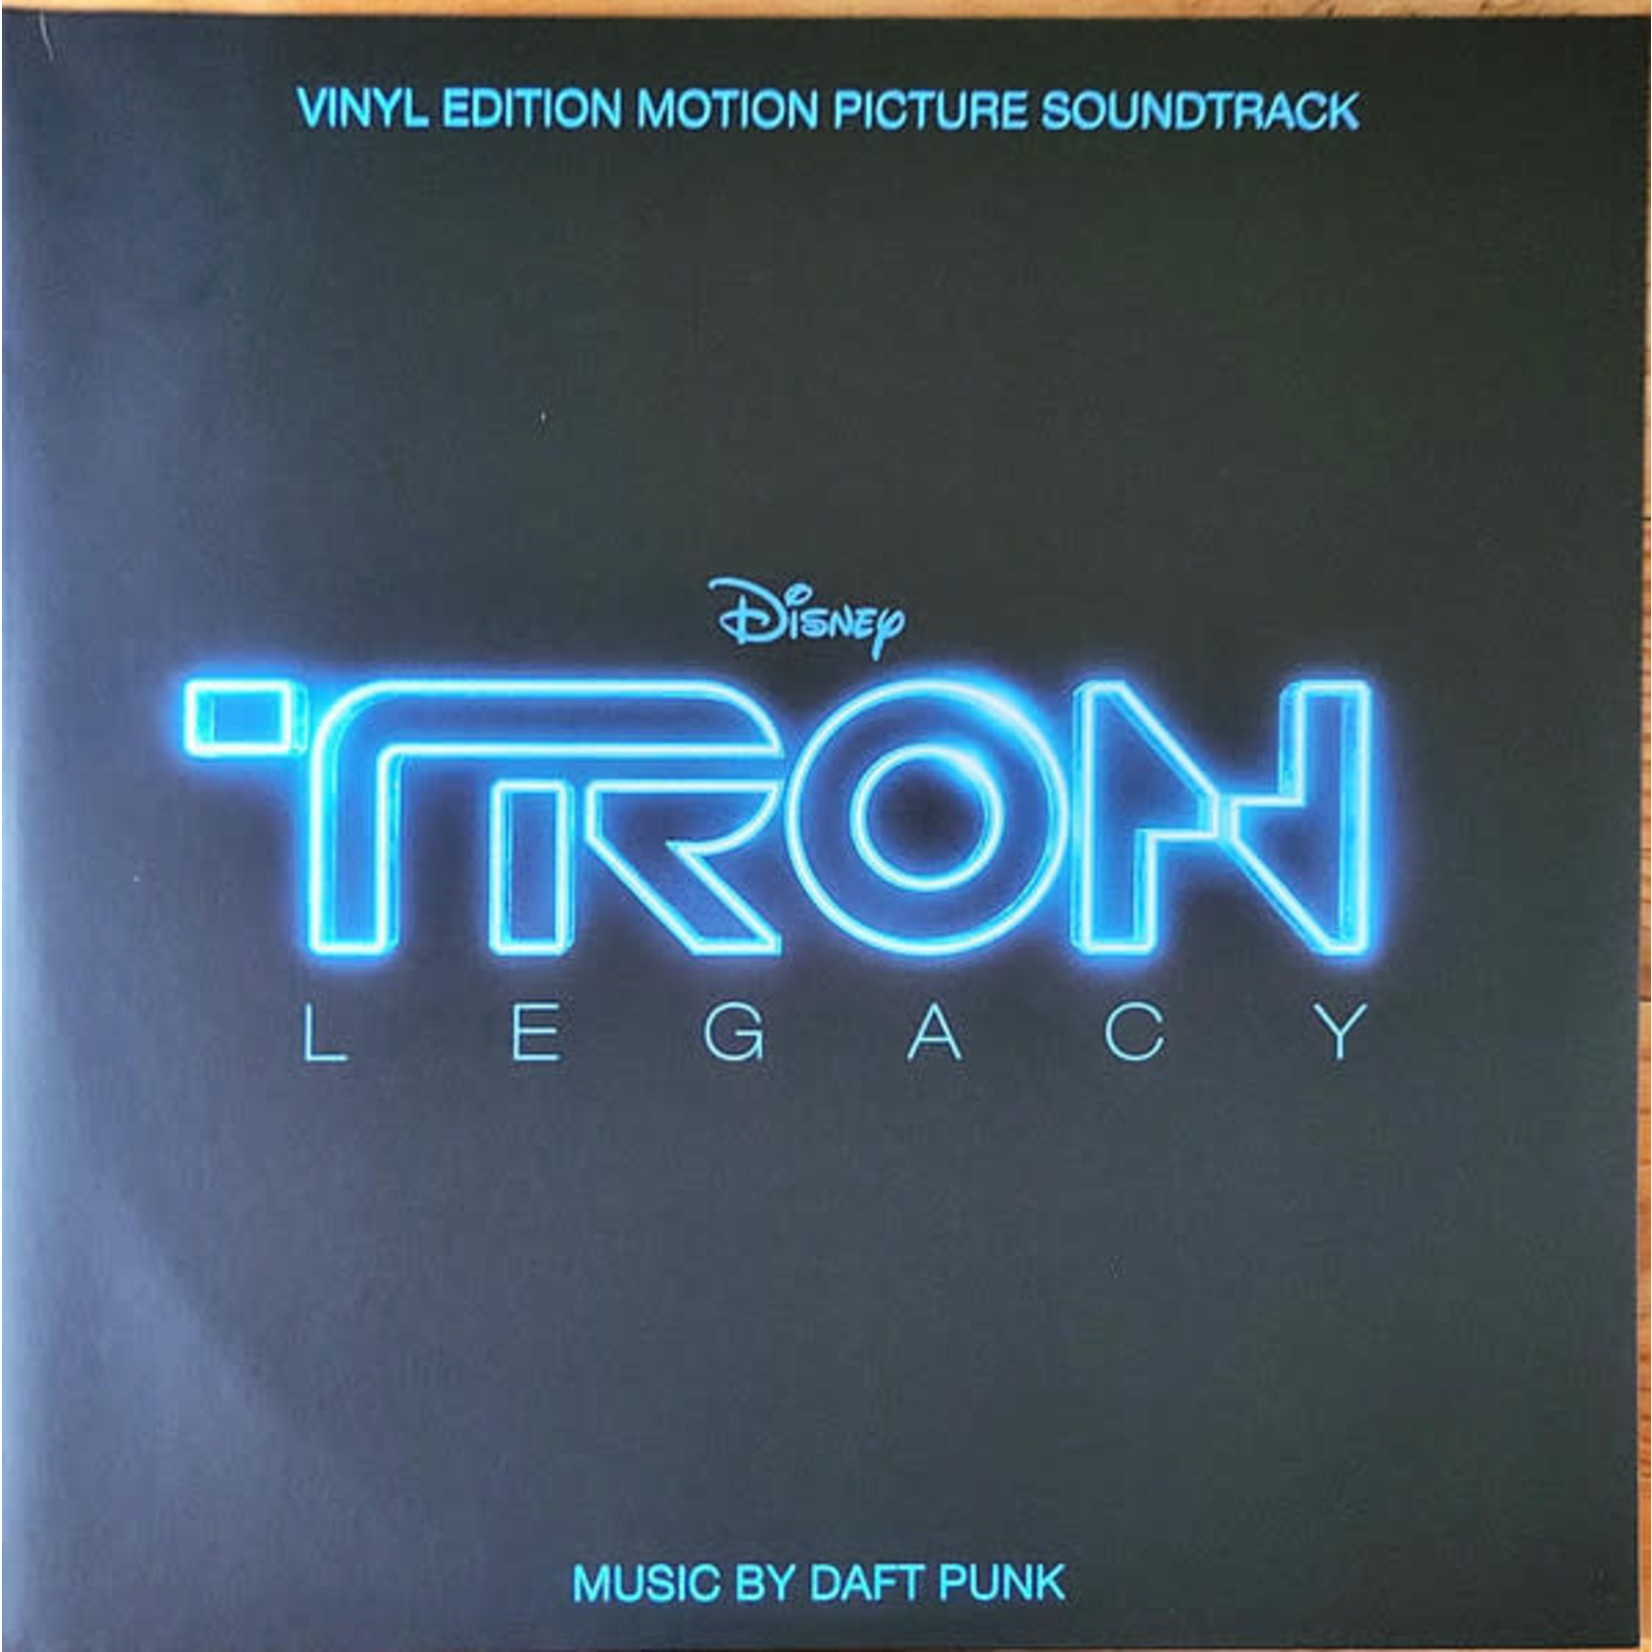 Daft Punk Daft Punk – TRON: Legacy (Vinyl Edition Motion Picture Soundtrack) (New)